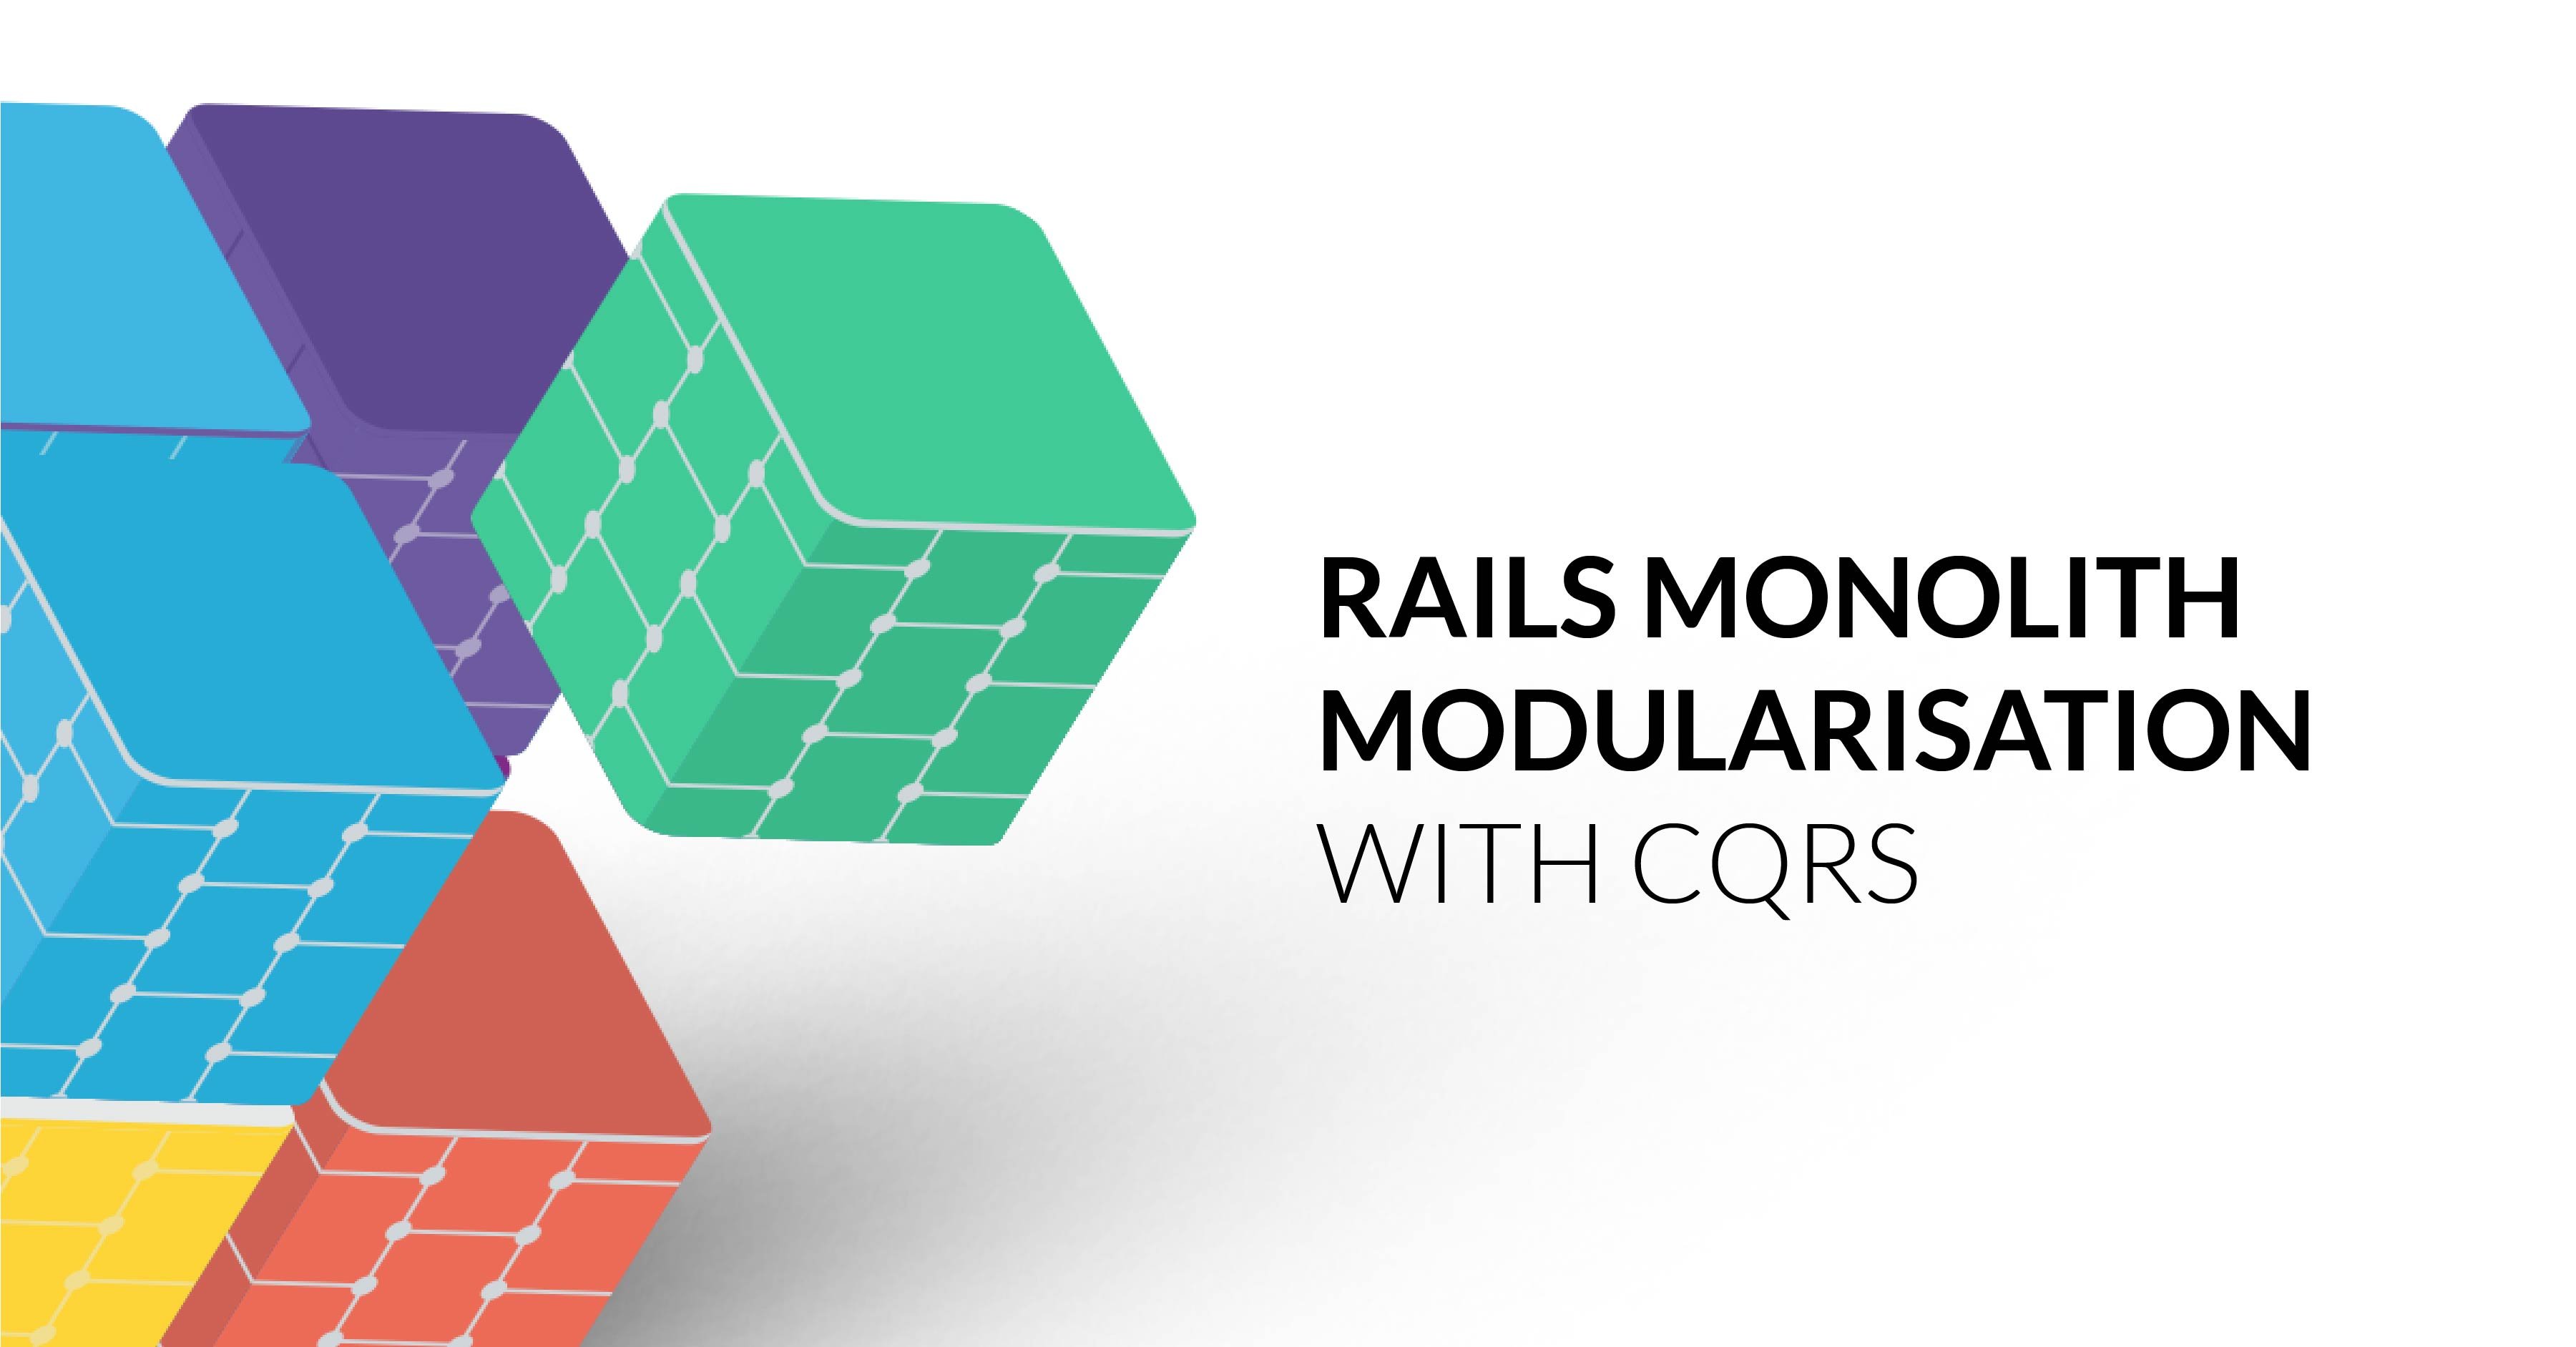 Rails Monolith Modularisation with CQRS